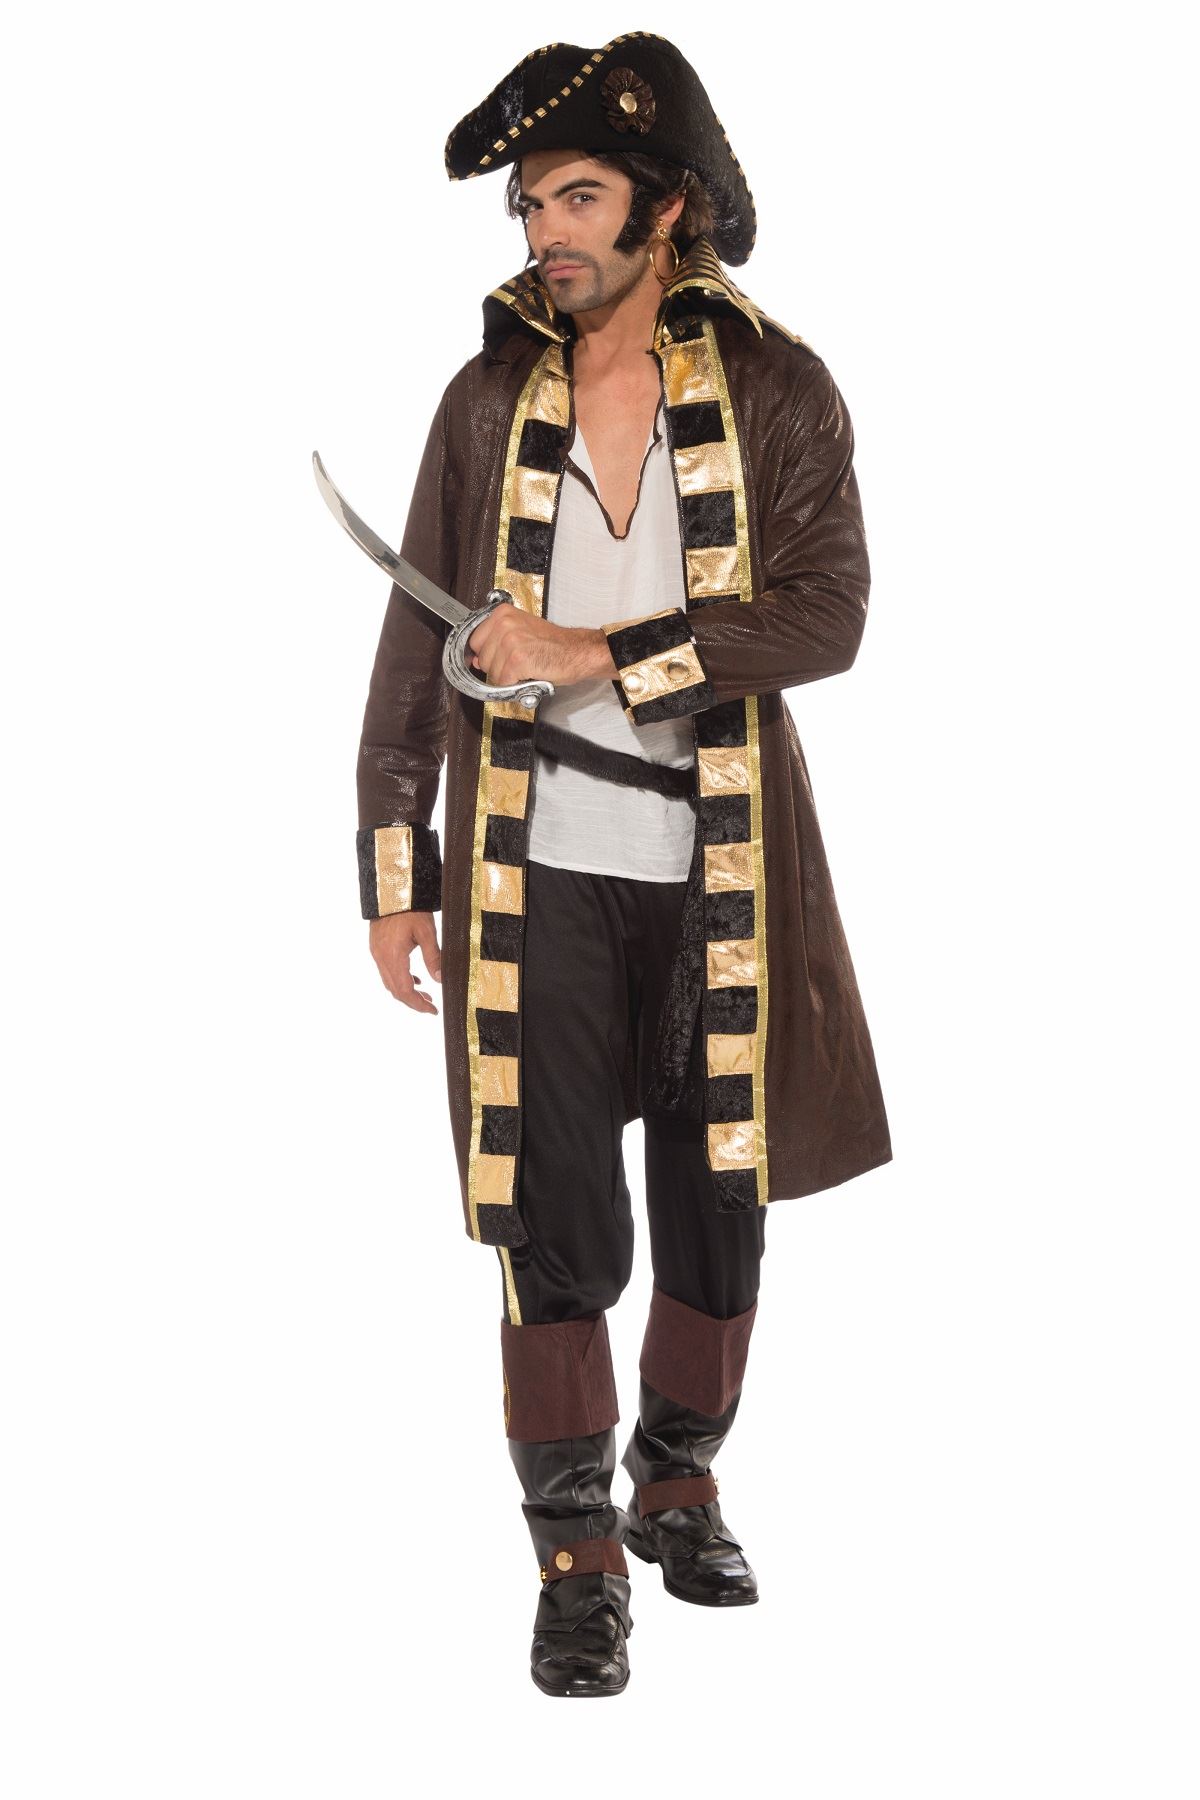 Buccaneer  Caribbean Captain Pirate Man Adults Mens Fancy Dress Costume 